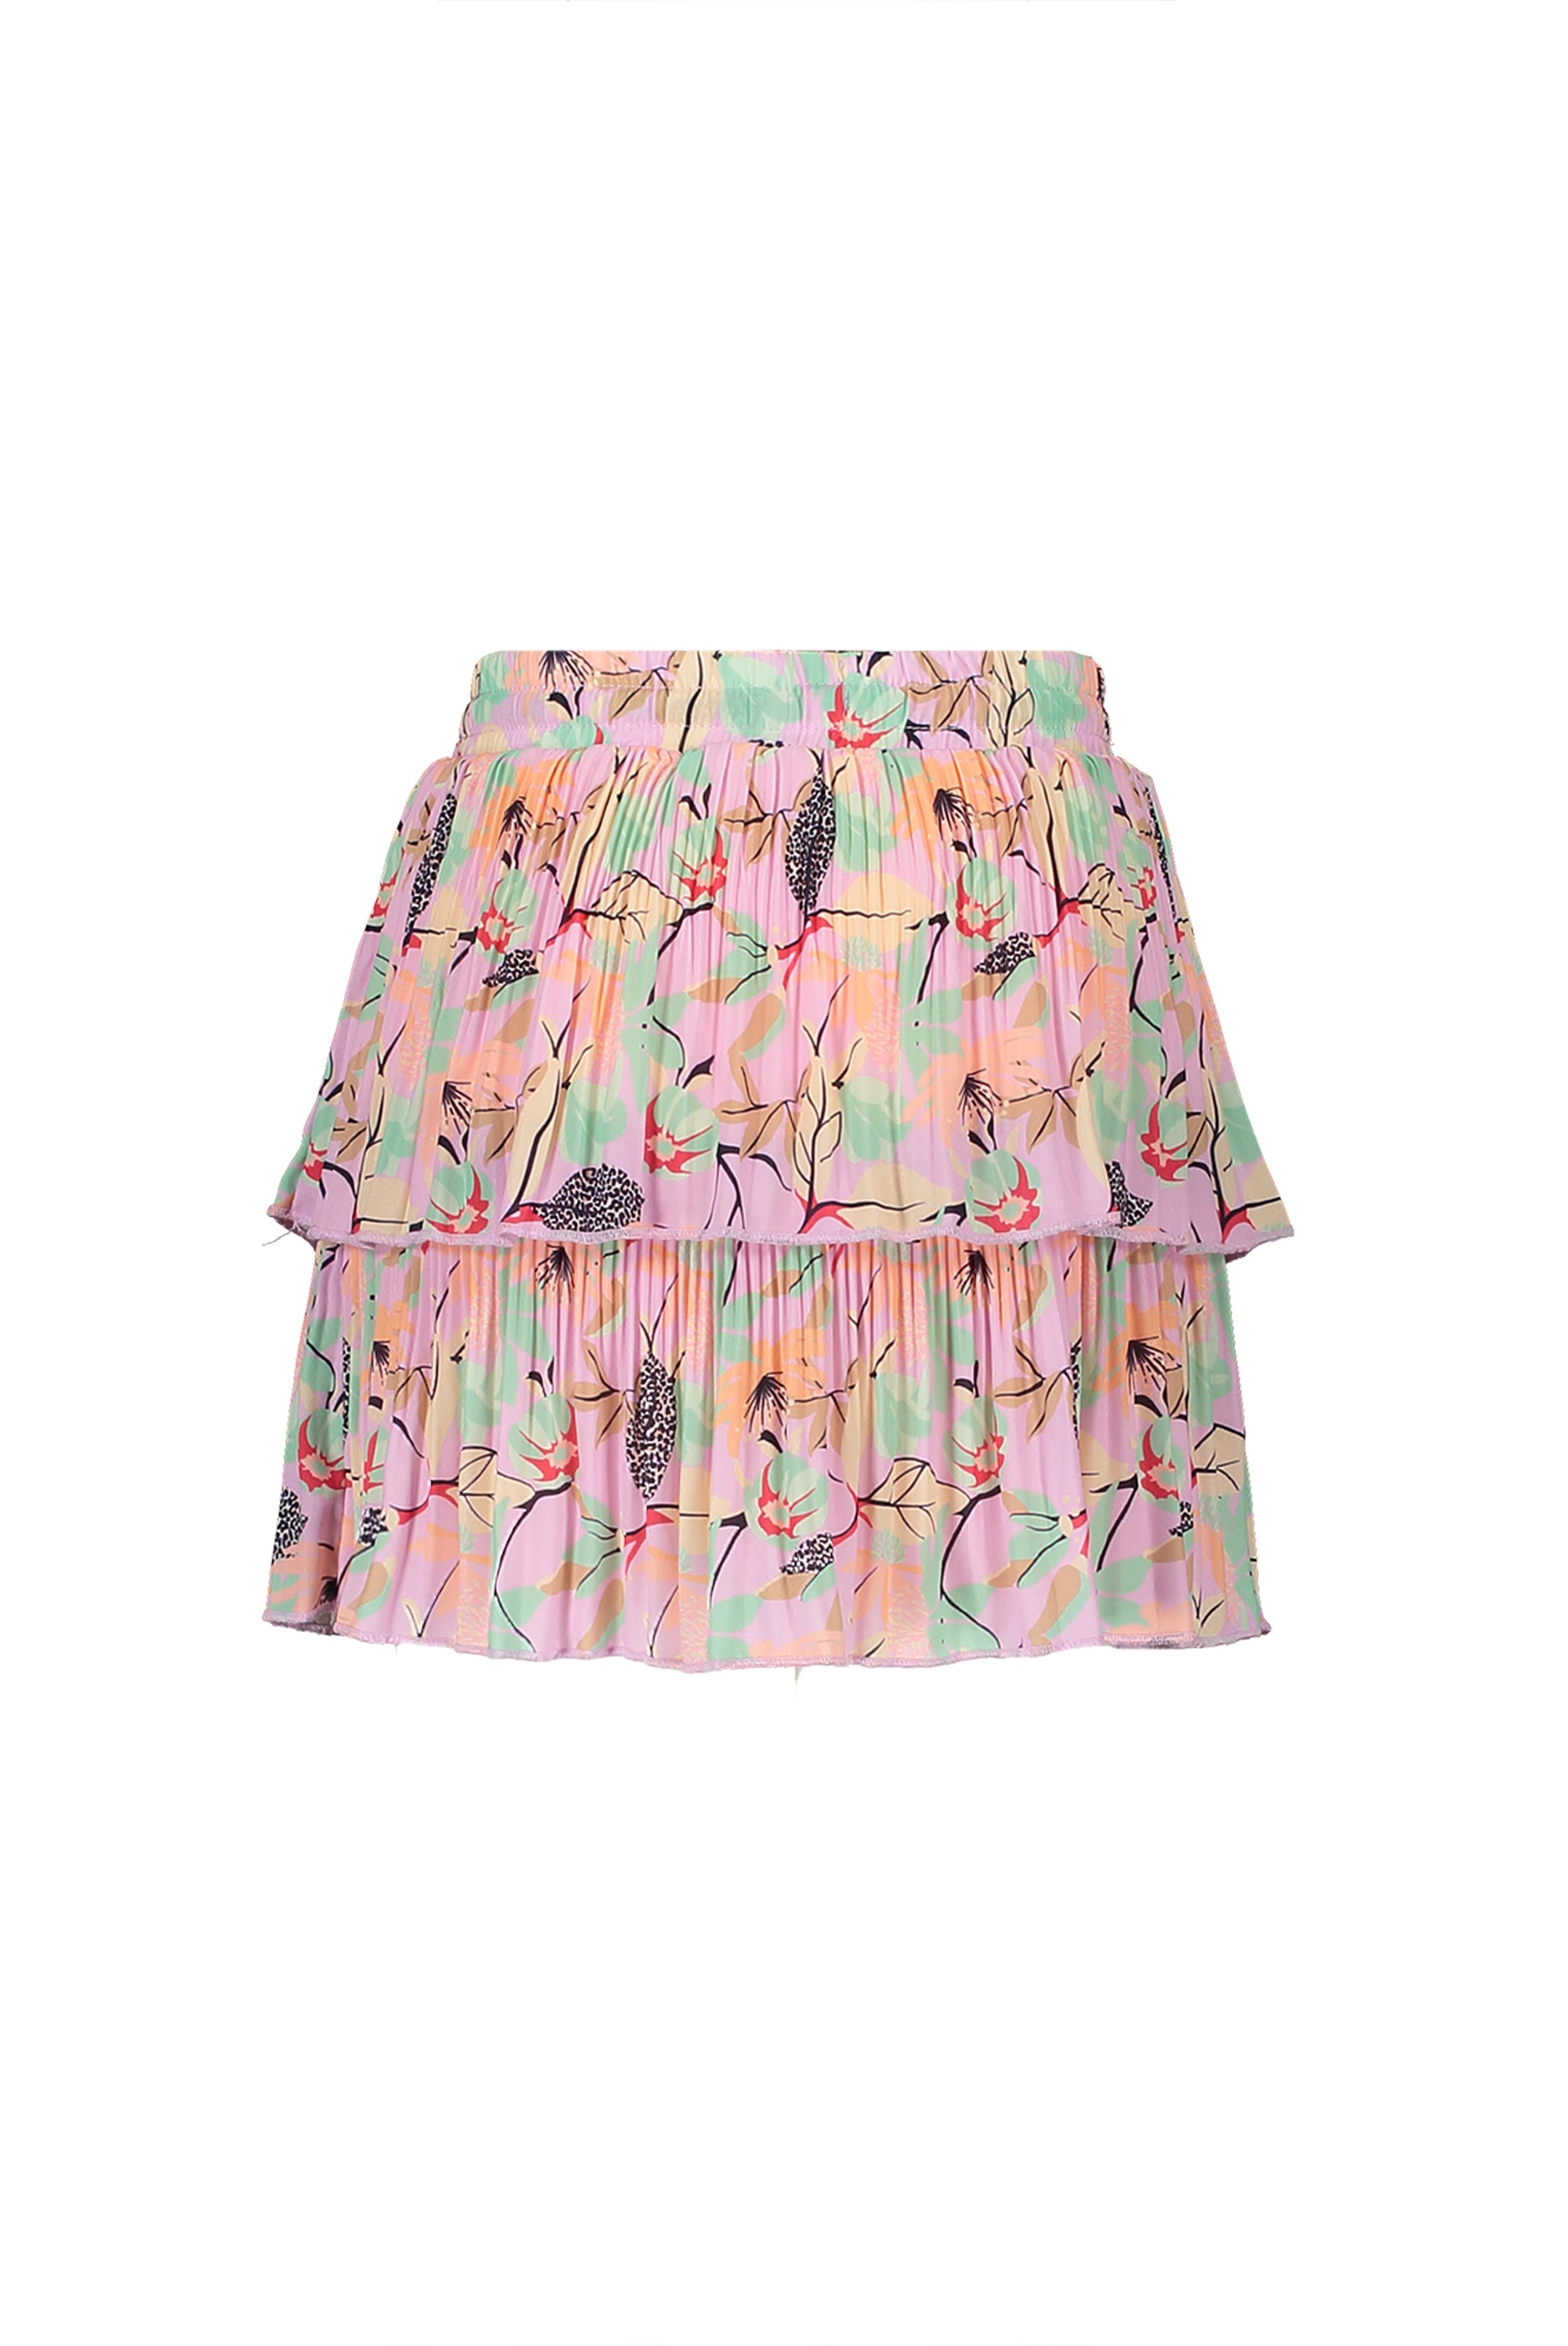 NoNo Nikki 2 layered pleated short skirt with short inside